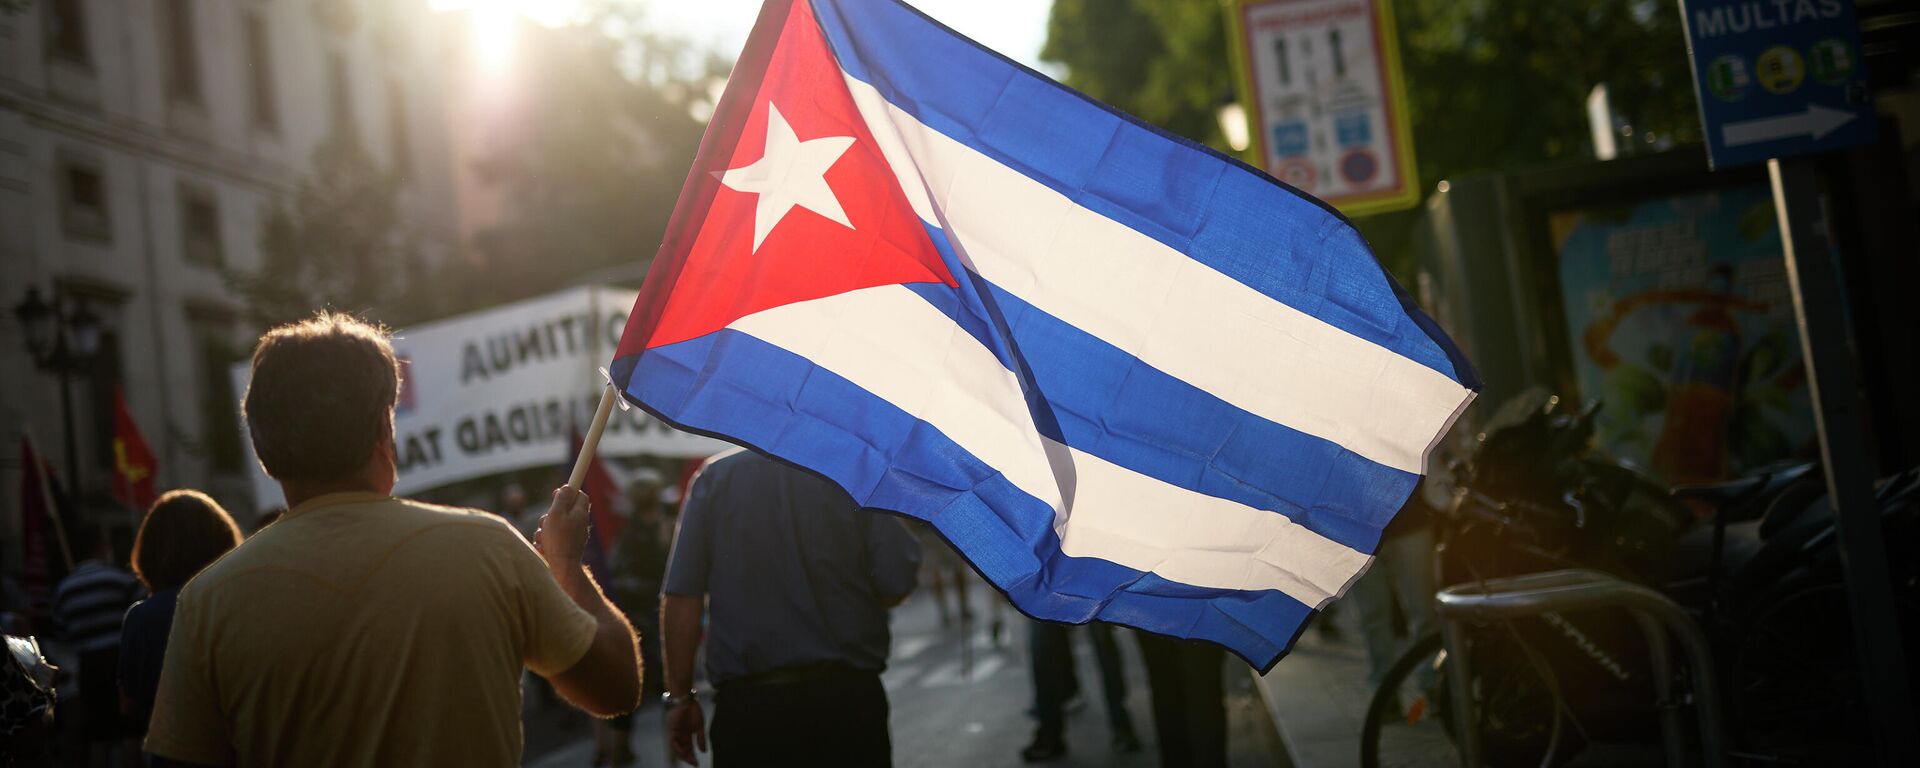 La bandera de Cuba (imagen referencial) - Sputnik Mundo, 1920, 17.11.2021